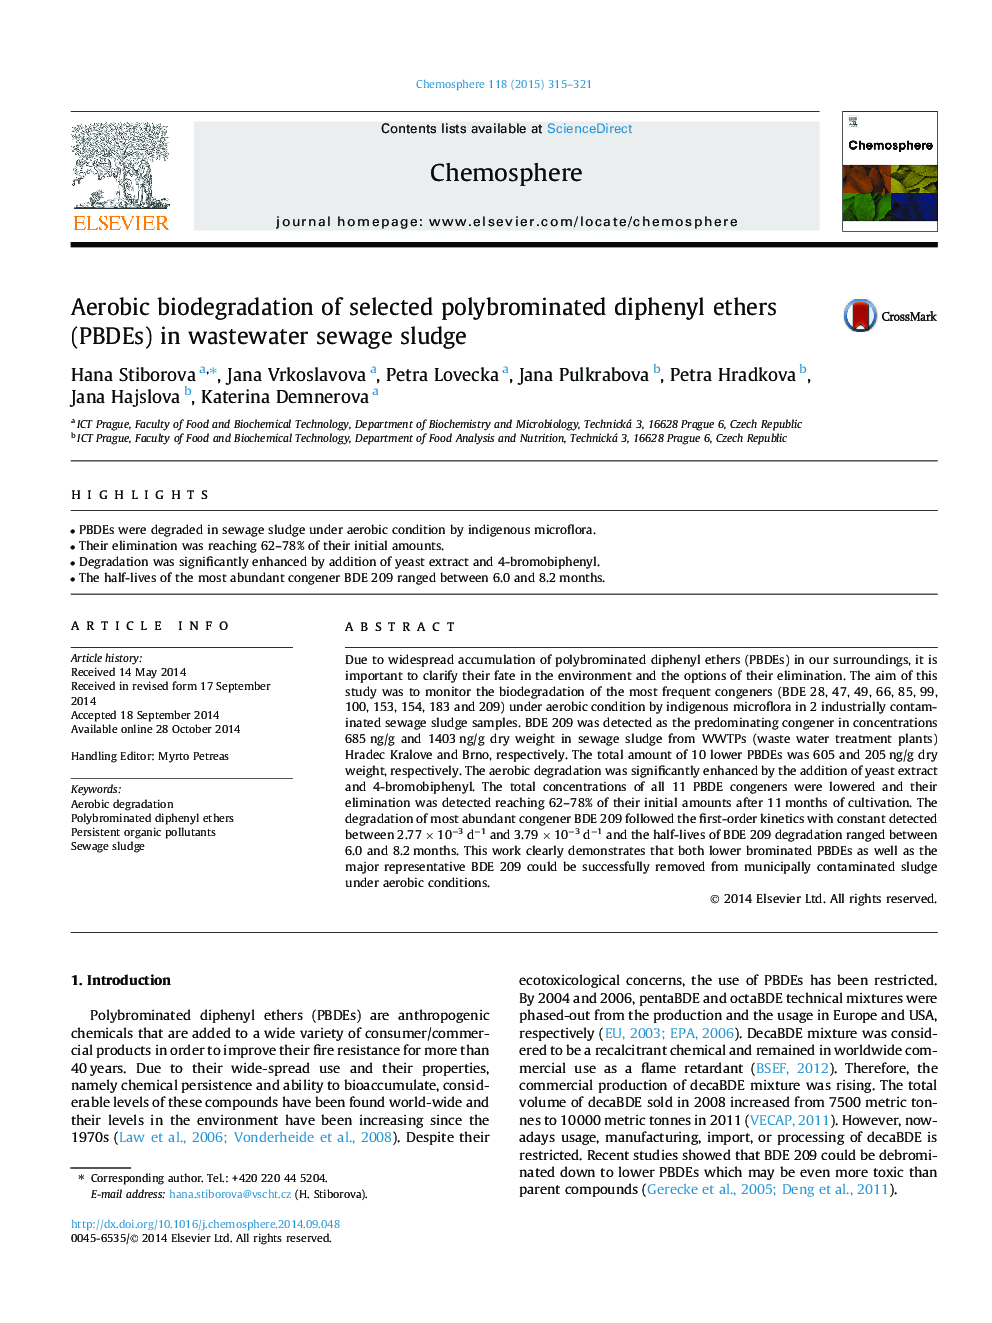 Aerobic biodegradation of selected polybrominated diphenyl ethers (PBDEs) in wastewater sewage sludge